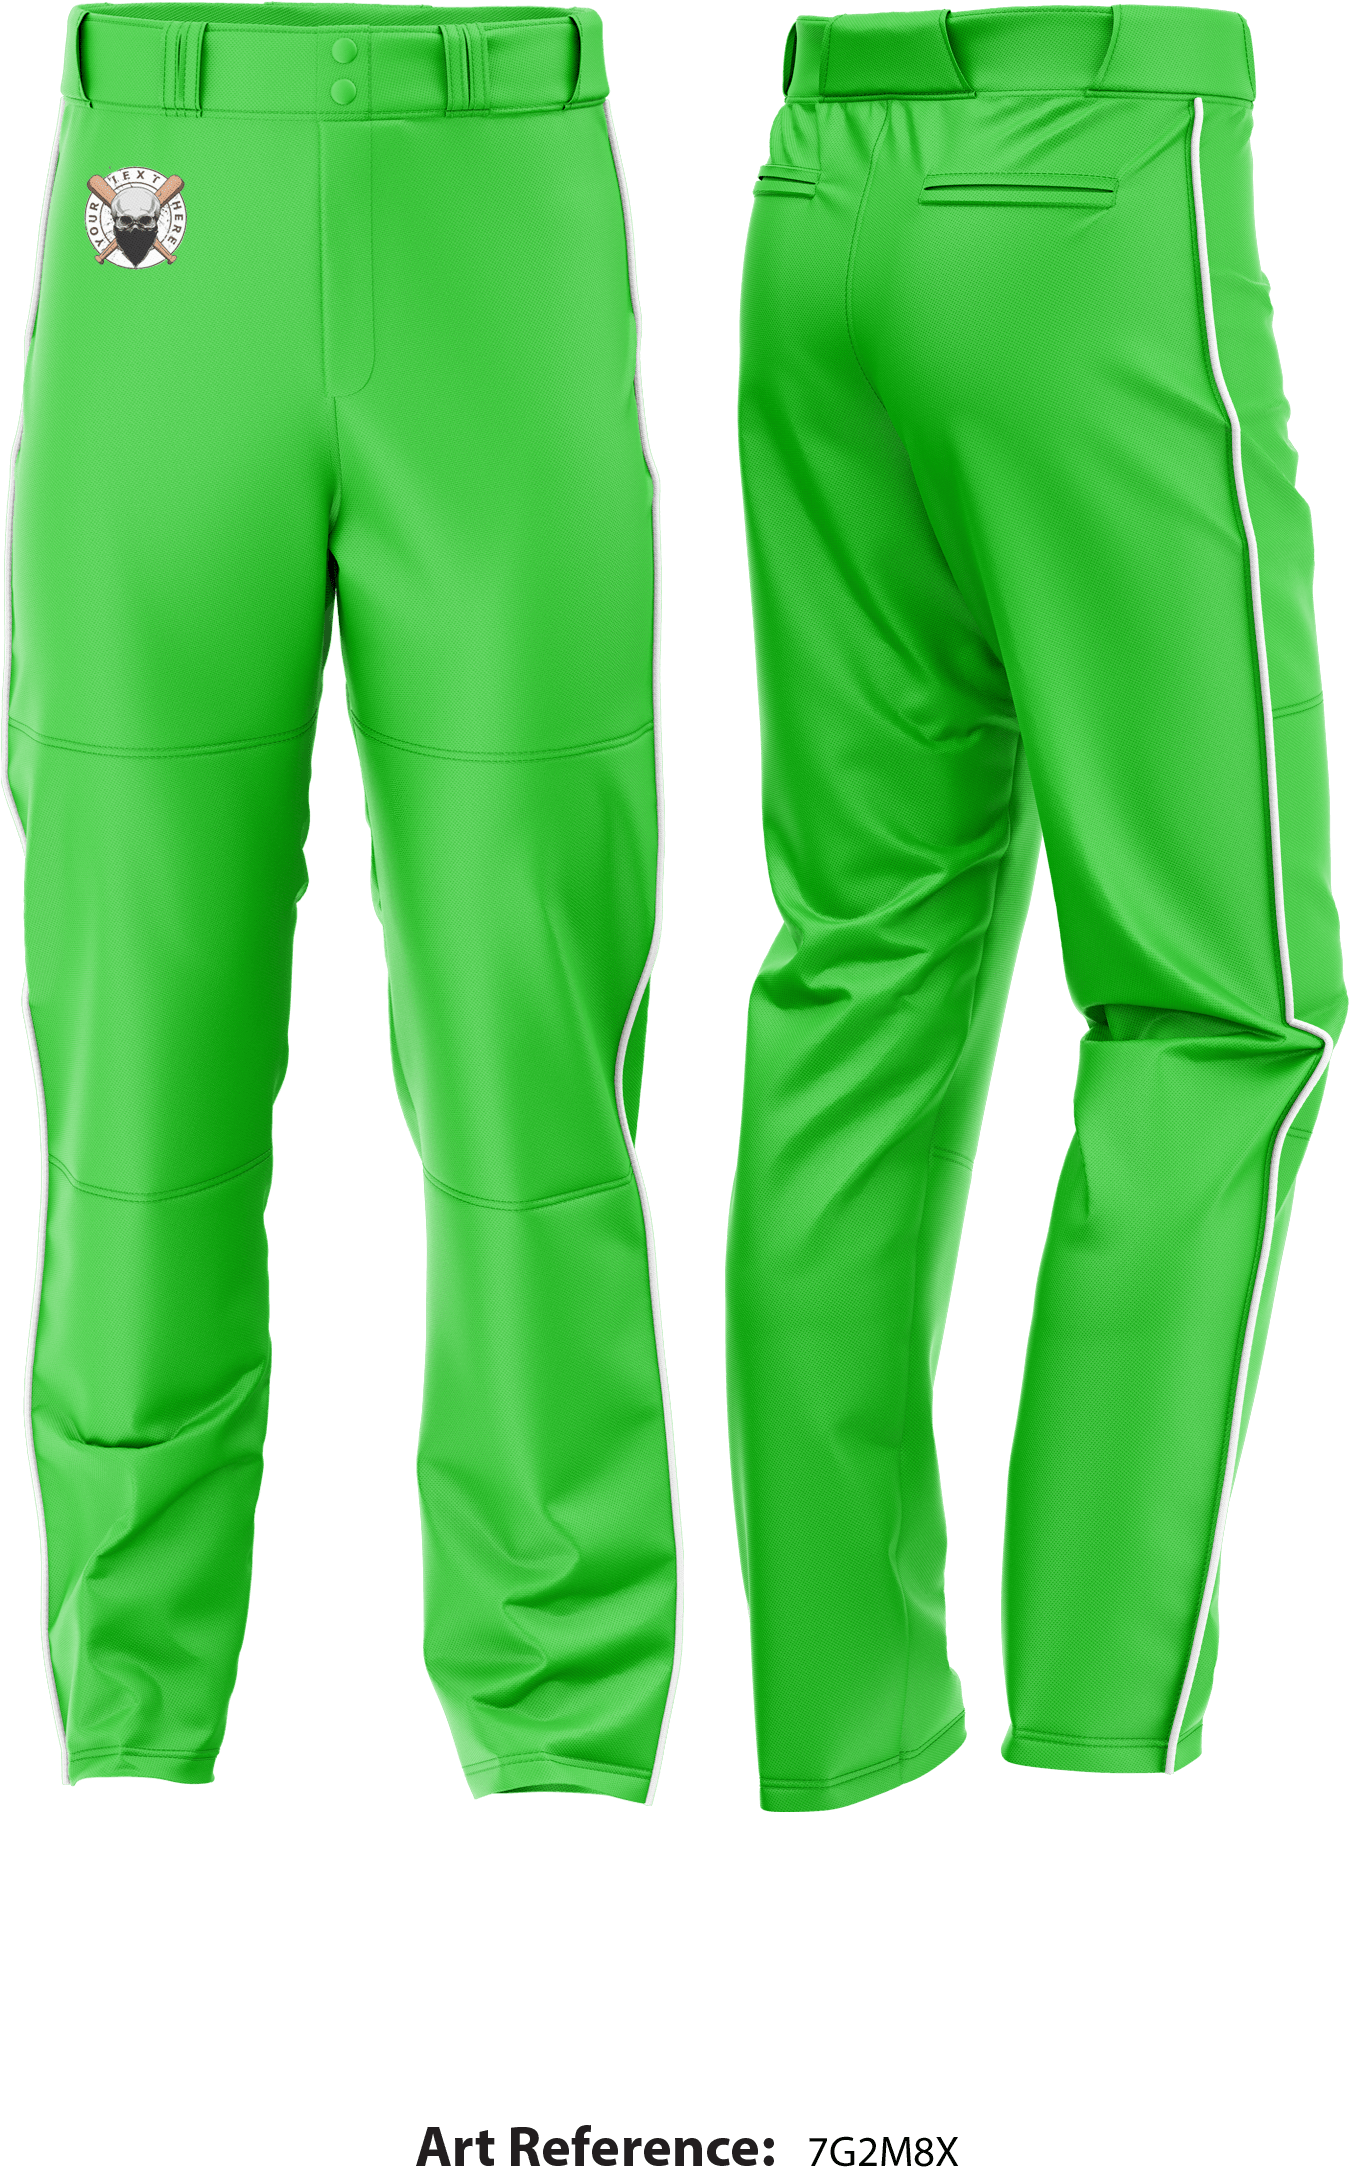 A Pair Of Green Pants